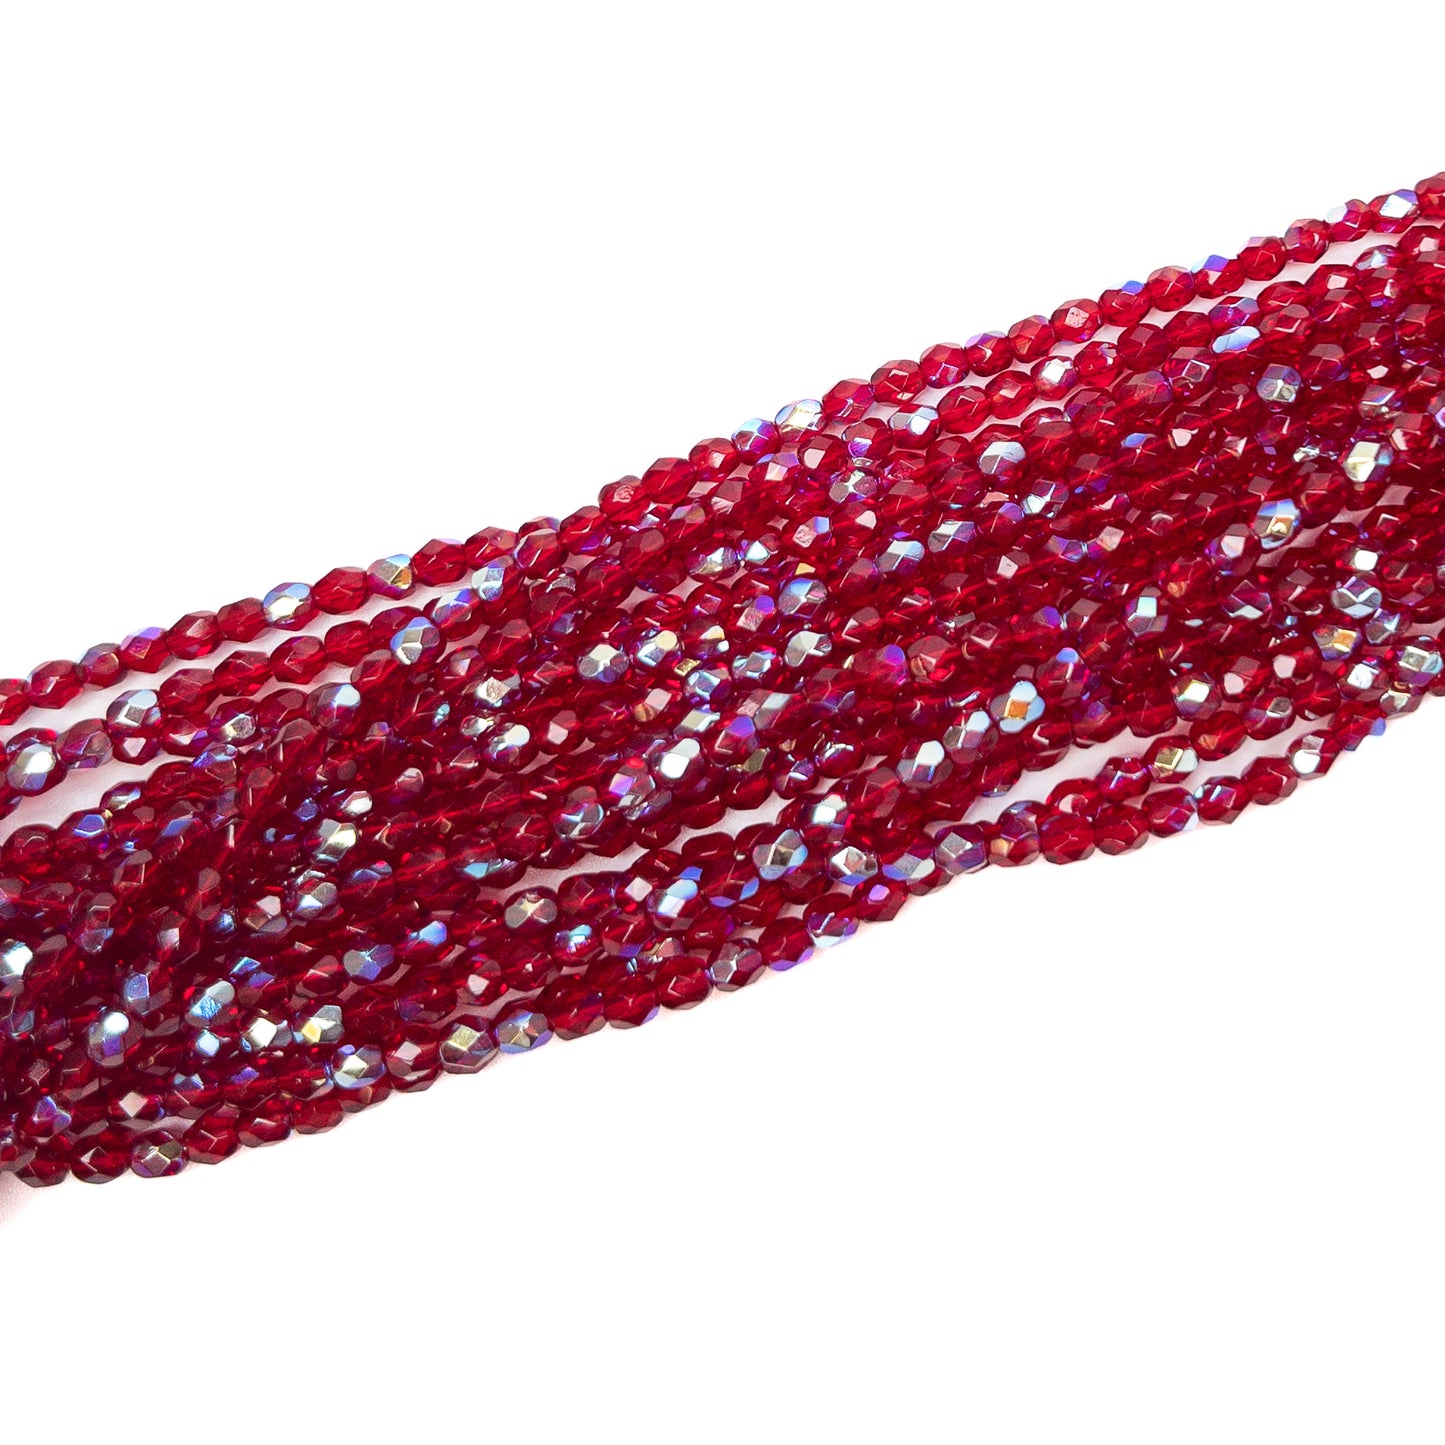 Medium Ruby AB 4mm Fire Polish Glass Bead - 50 pcs.